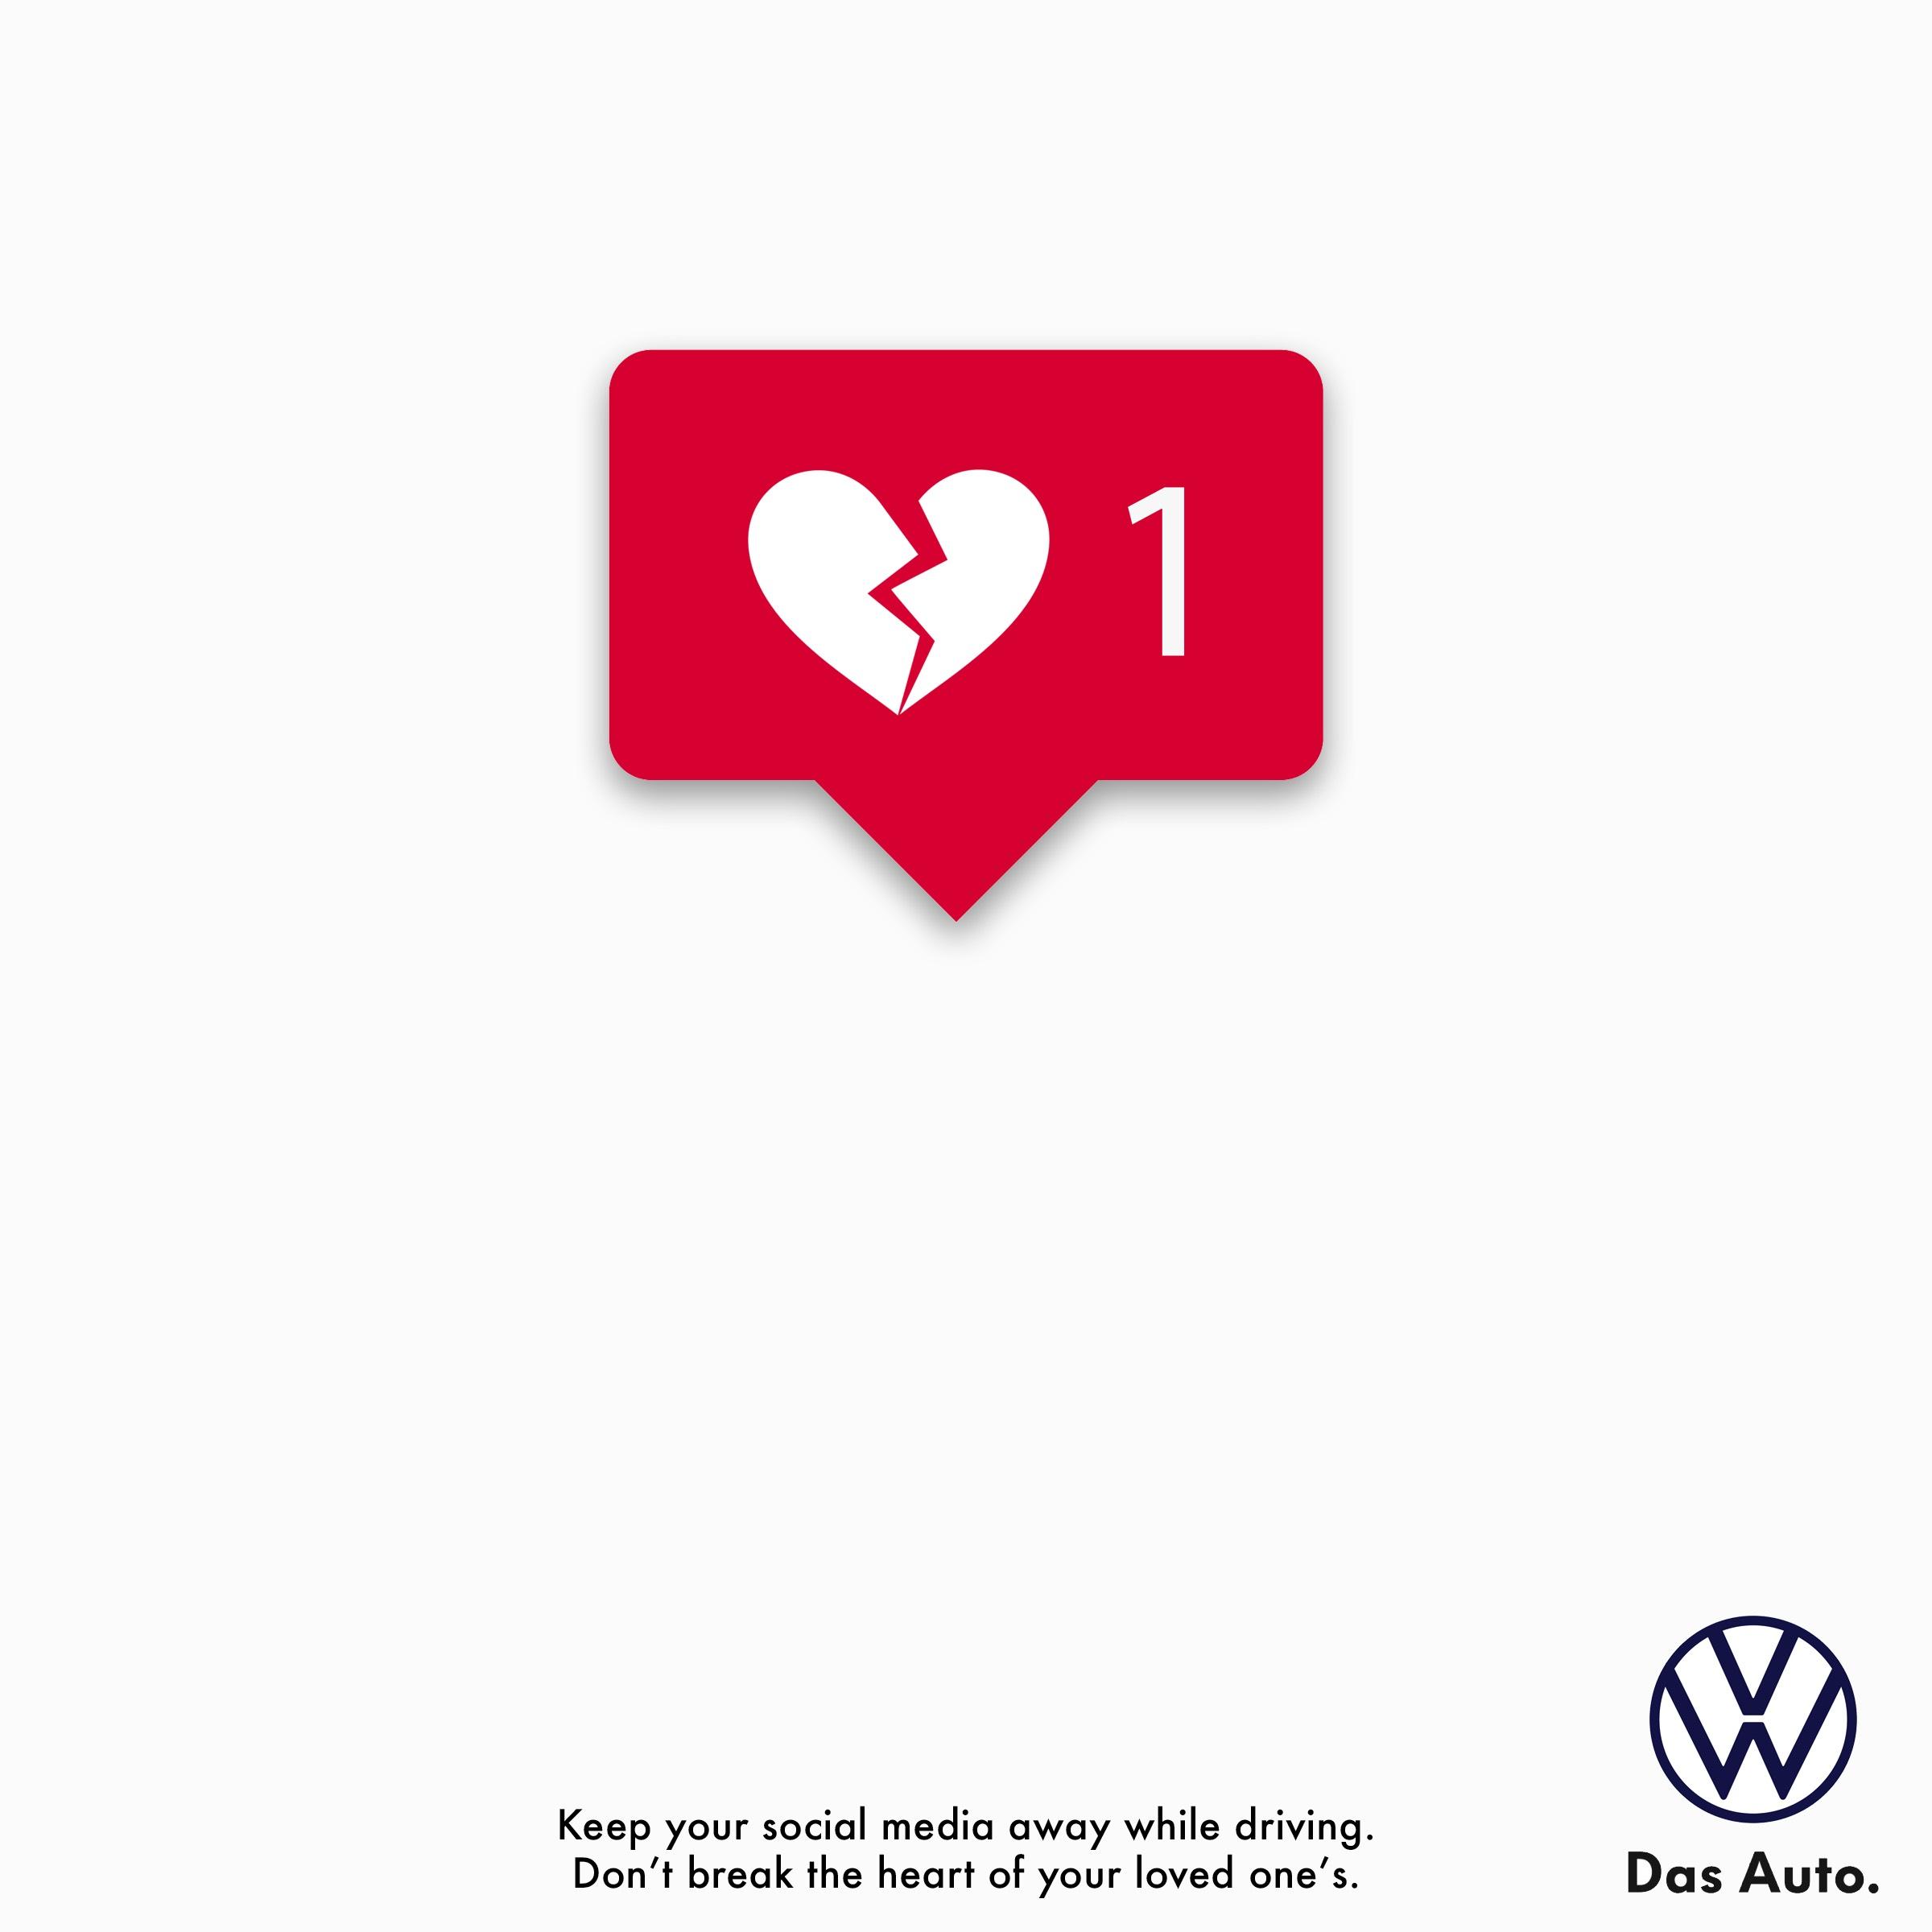 Volkswagen Road Safety Campaign | Social media